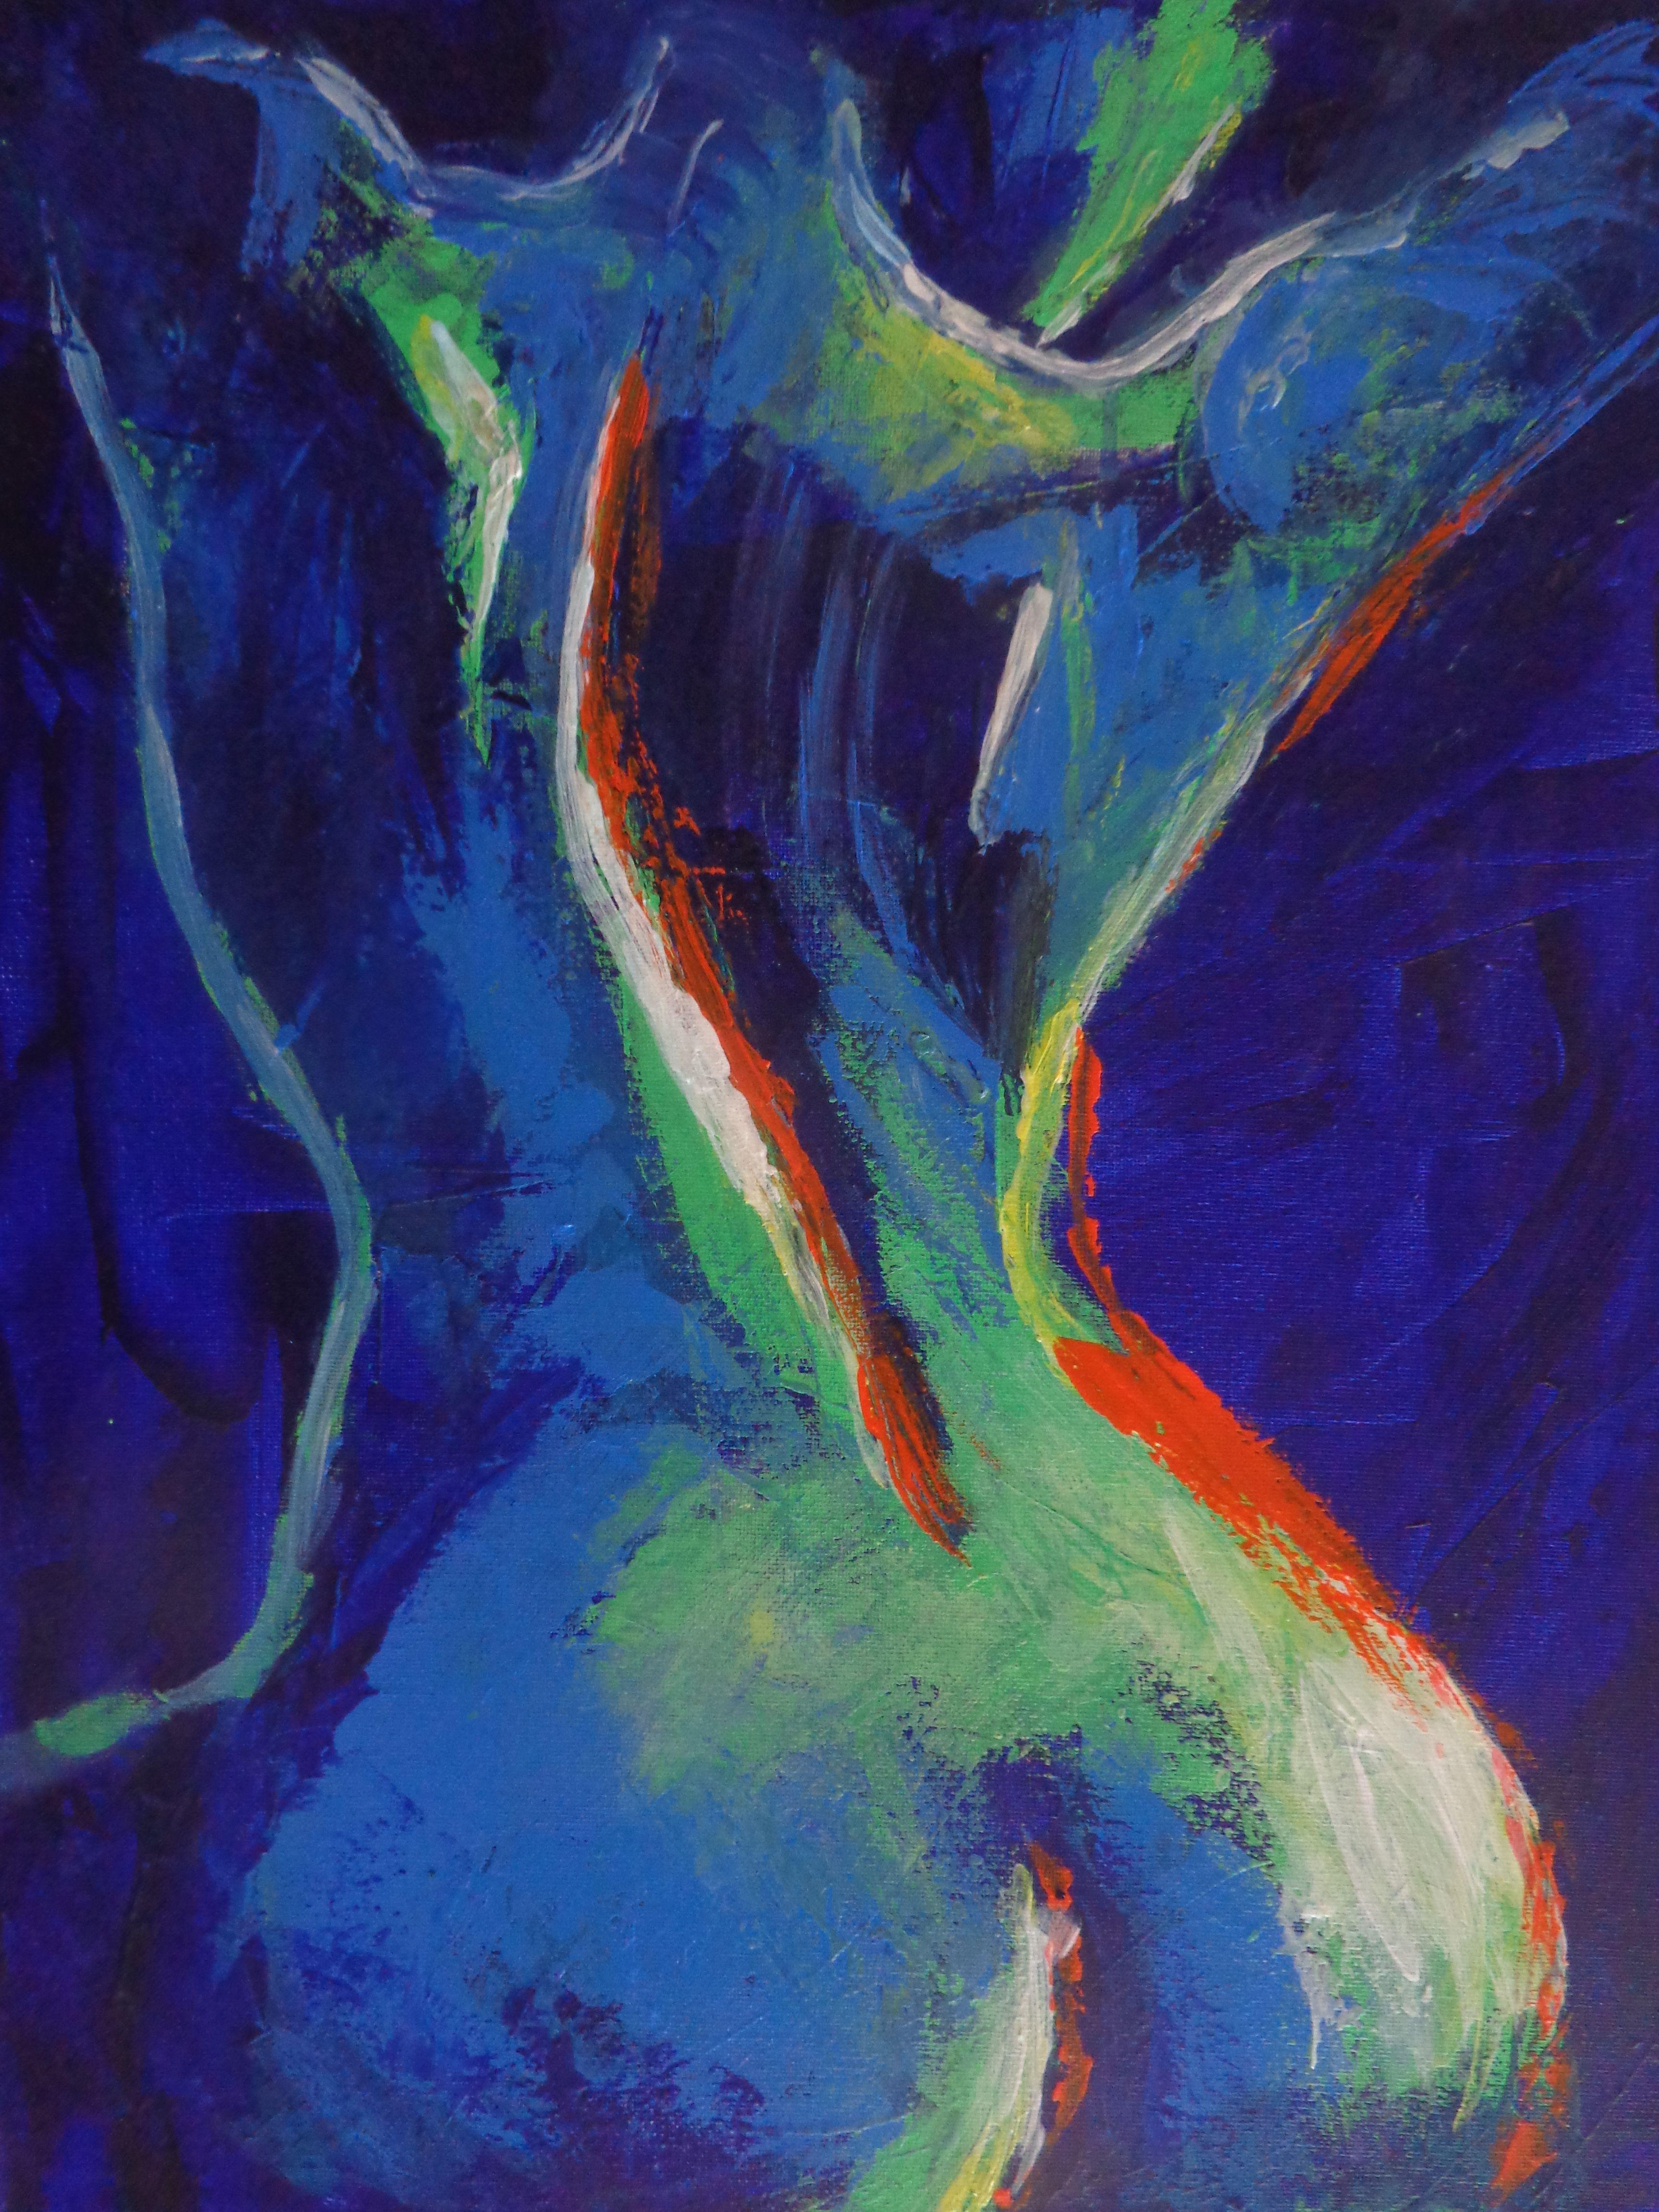 Midnight Lady A - Female Nude, Mixed Media on Canvas - Mixed Media Art by Carmen Tyrrell